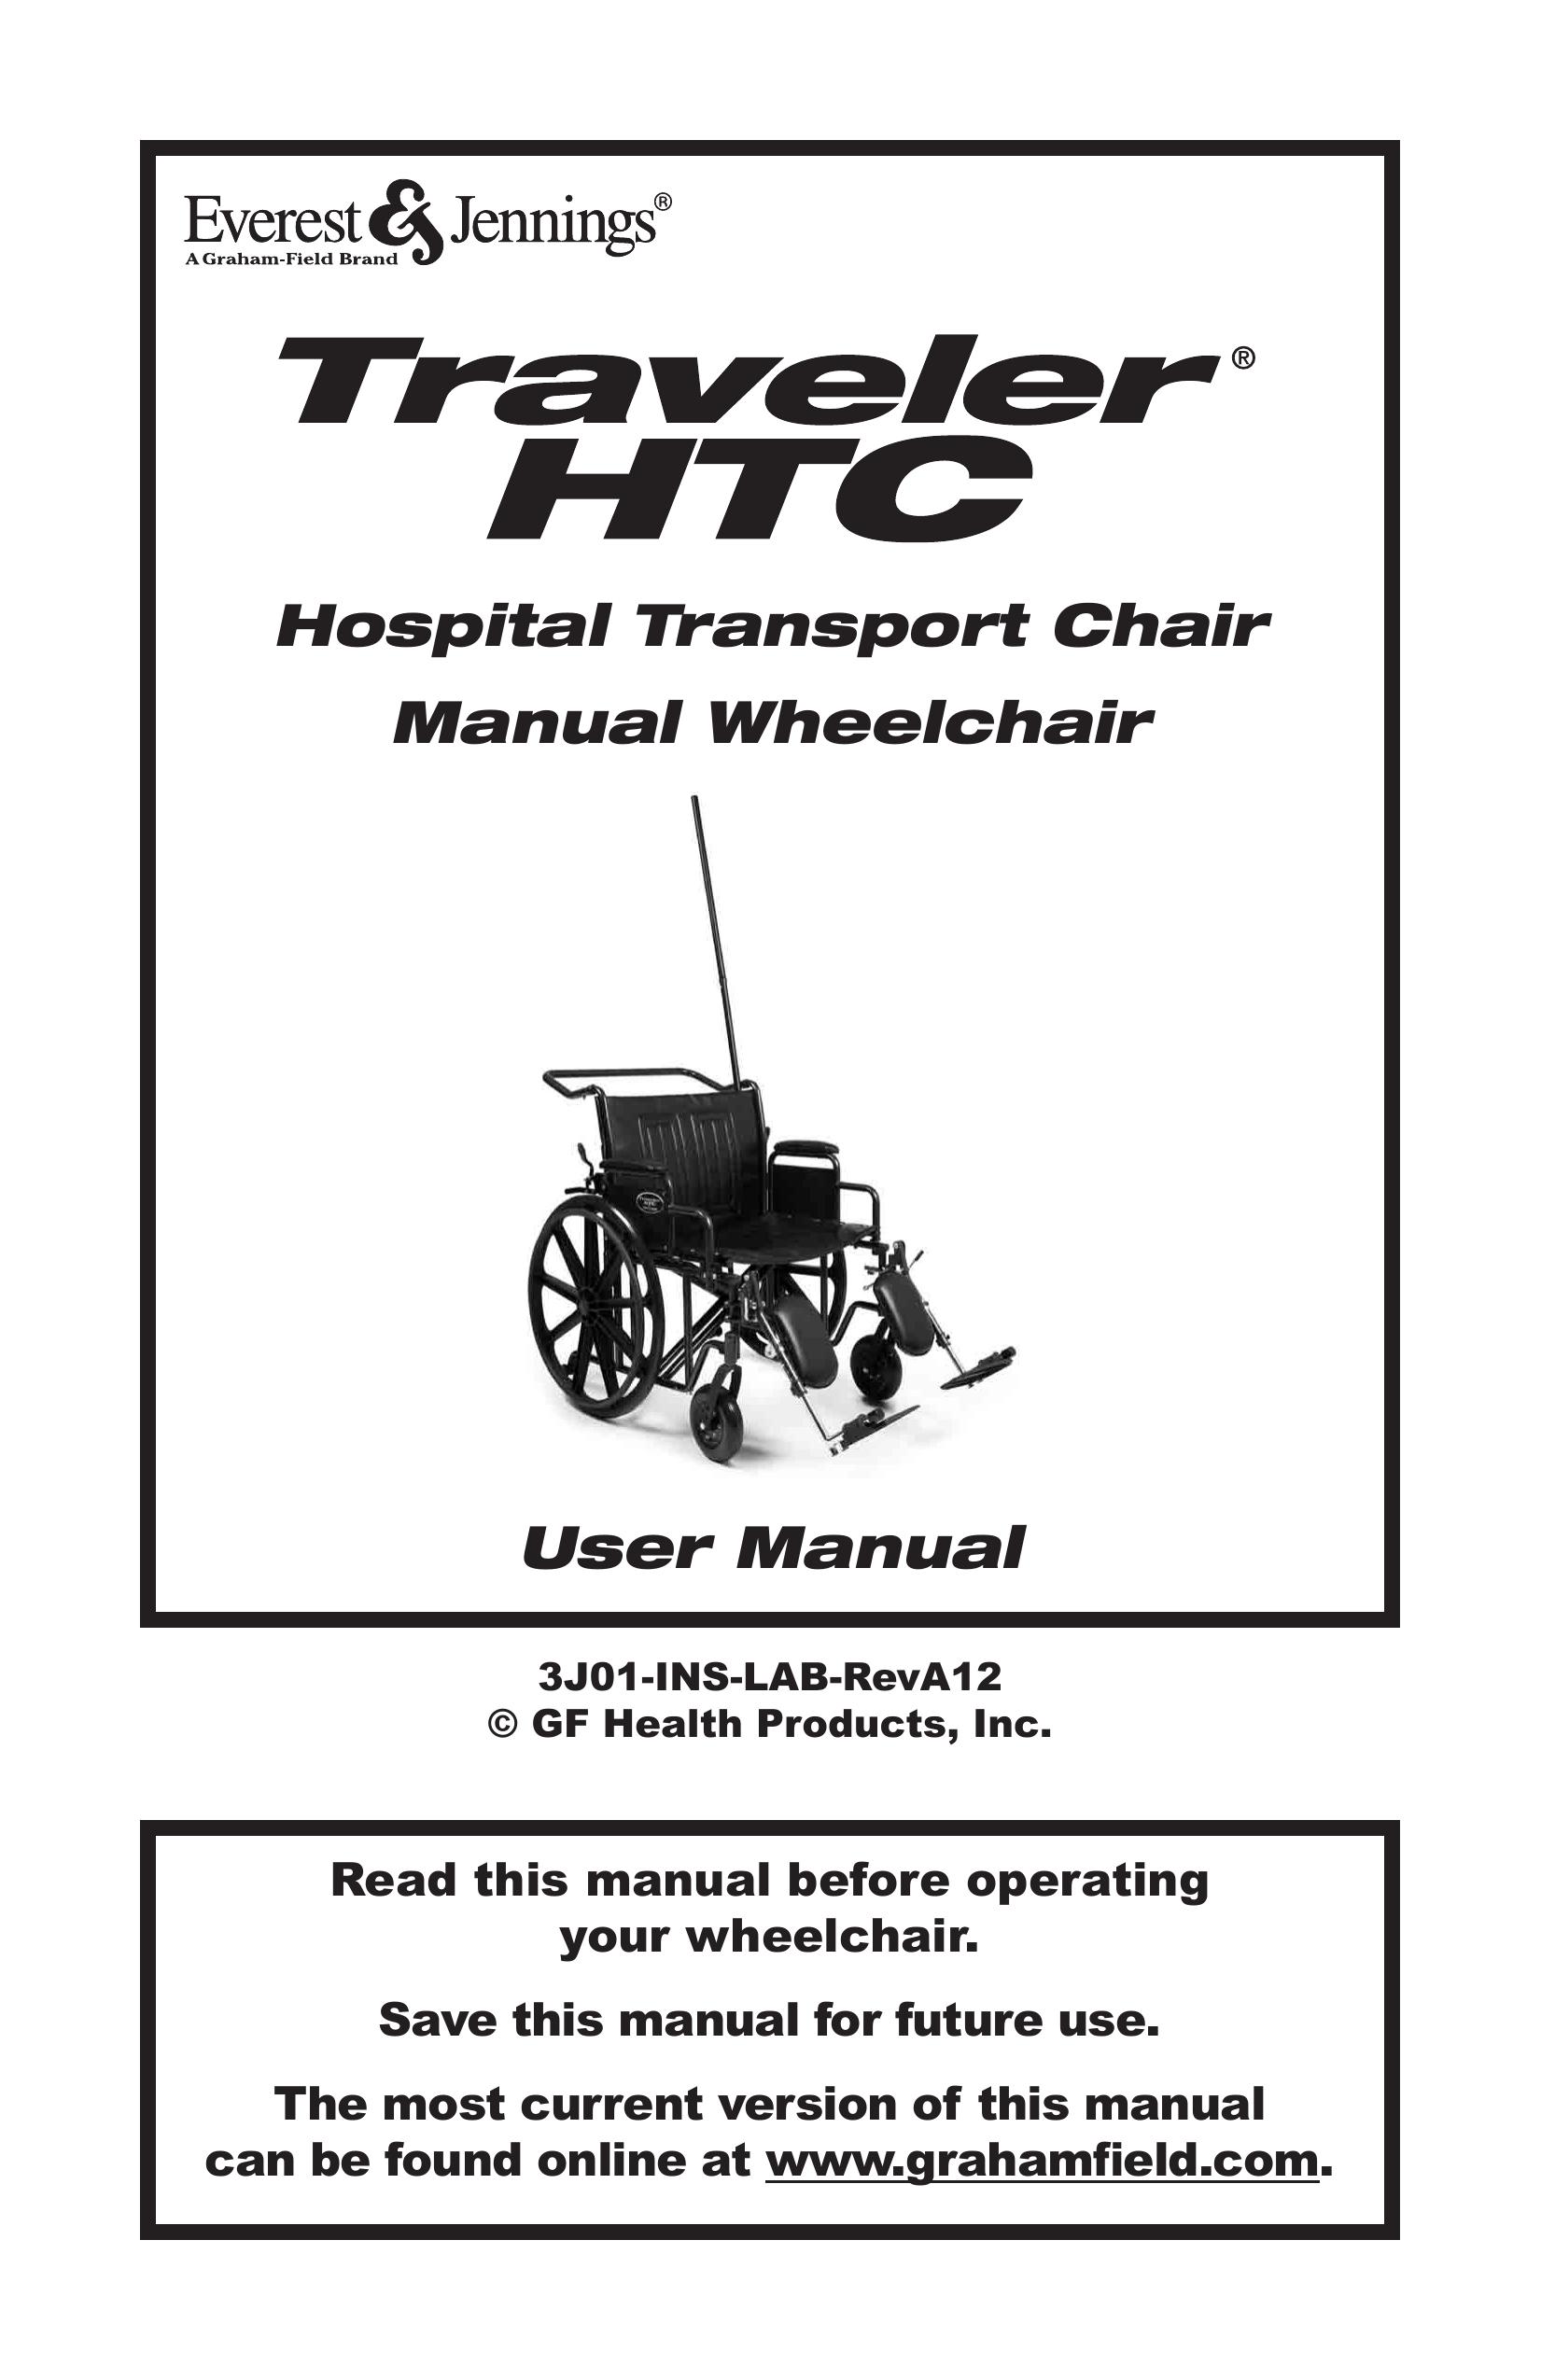 E&J Traveler HTC Wheelchair User Manual